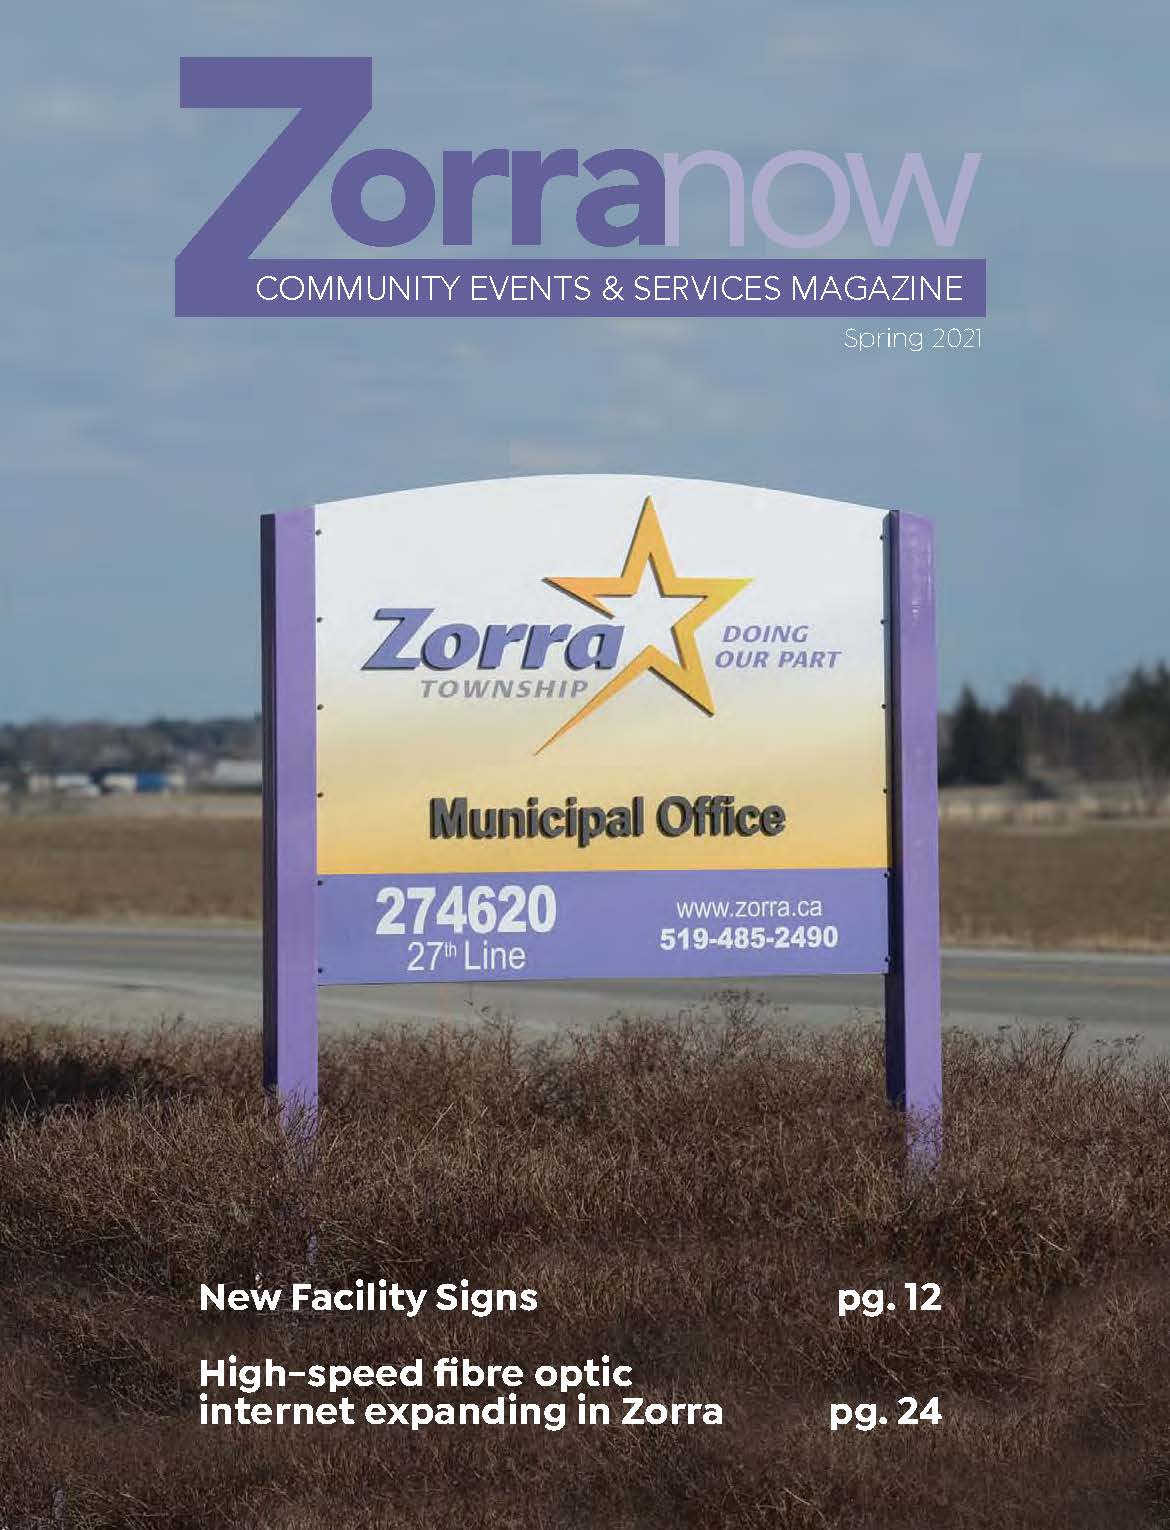 zorra now cover 2021 spring